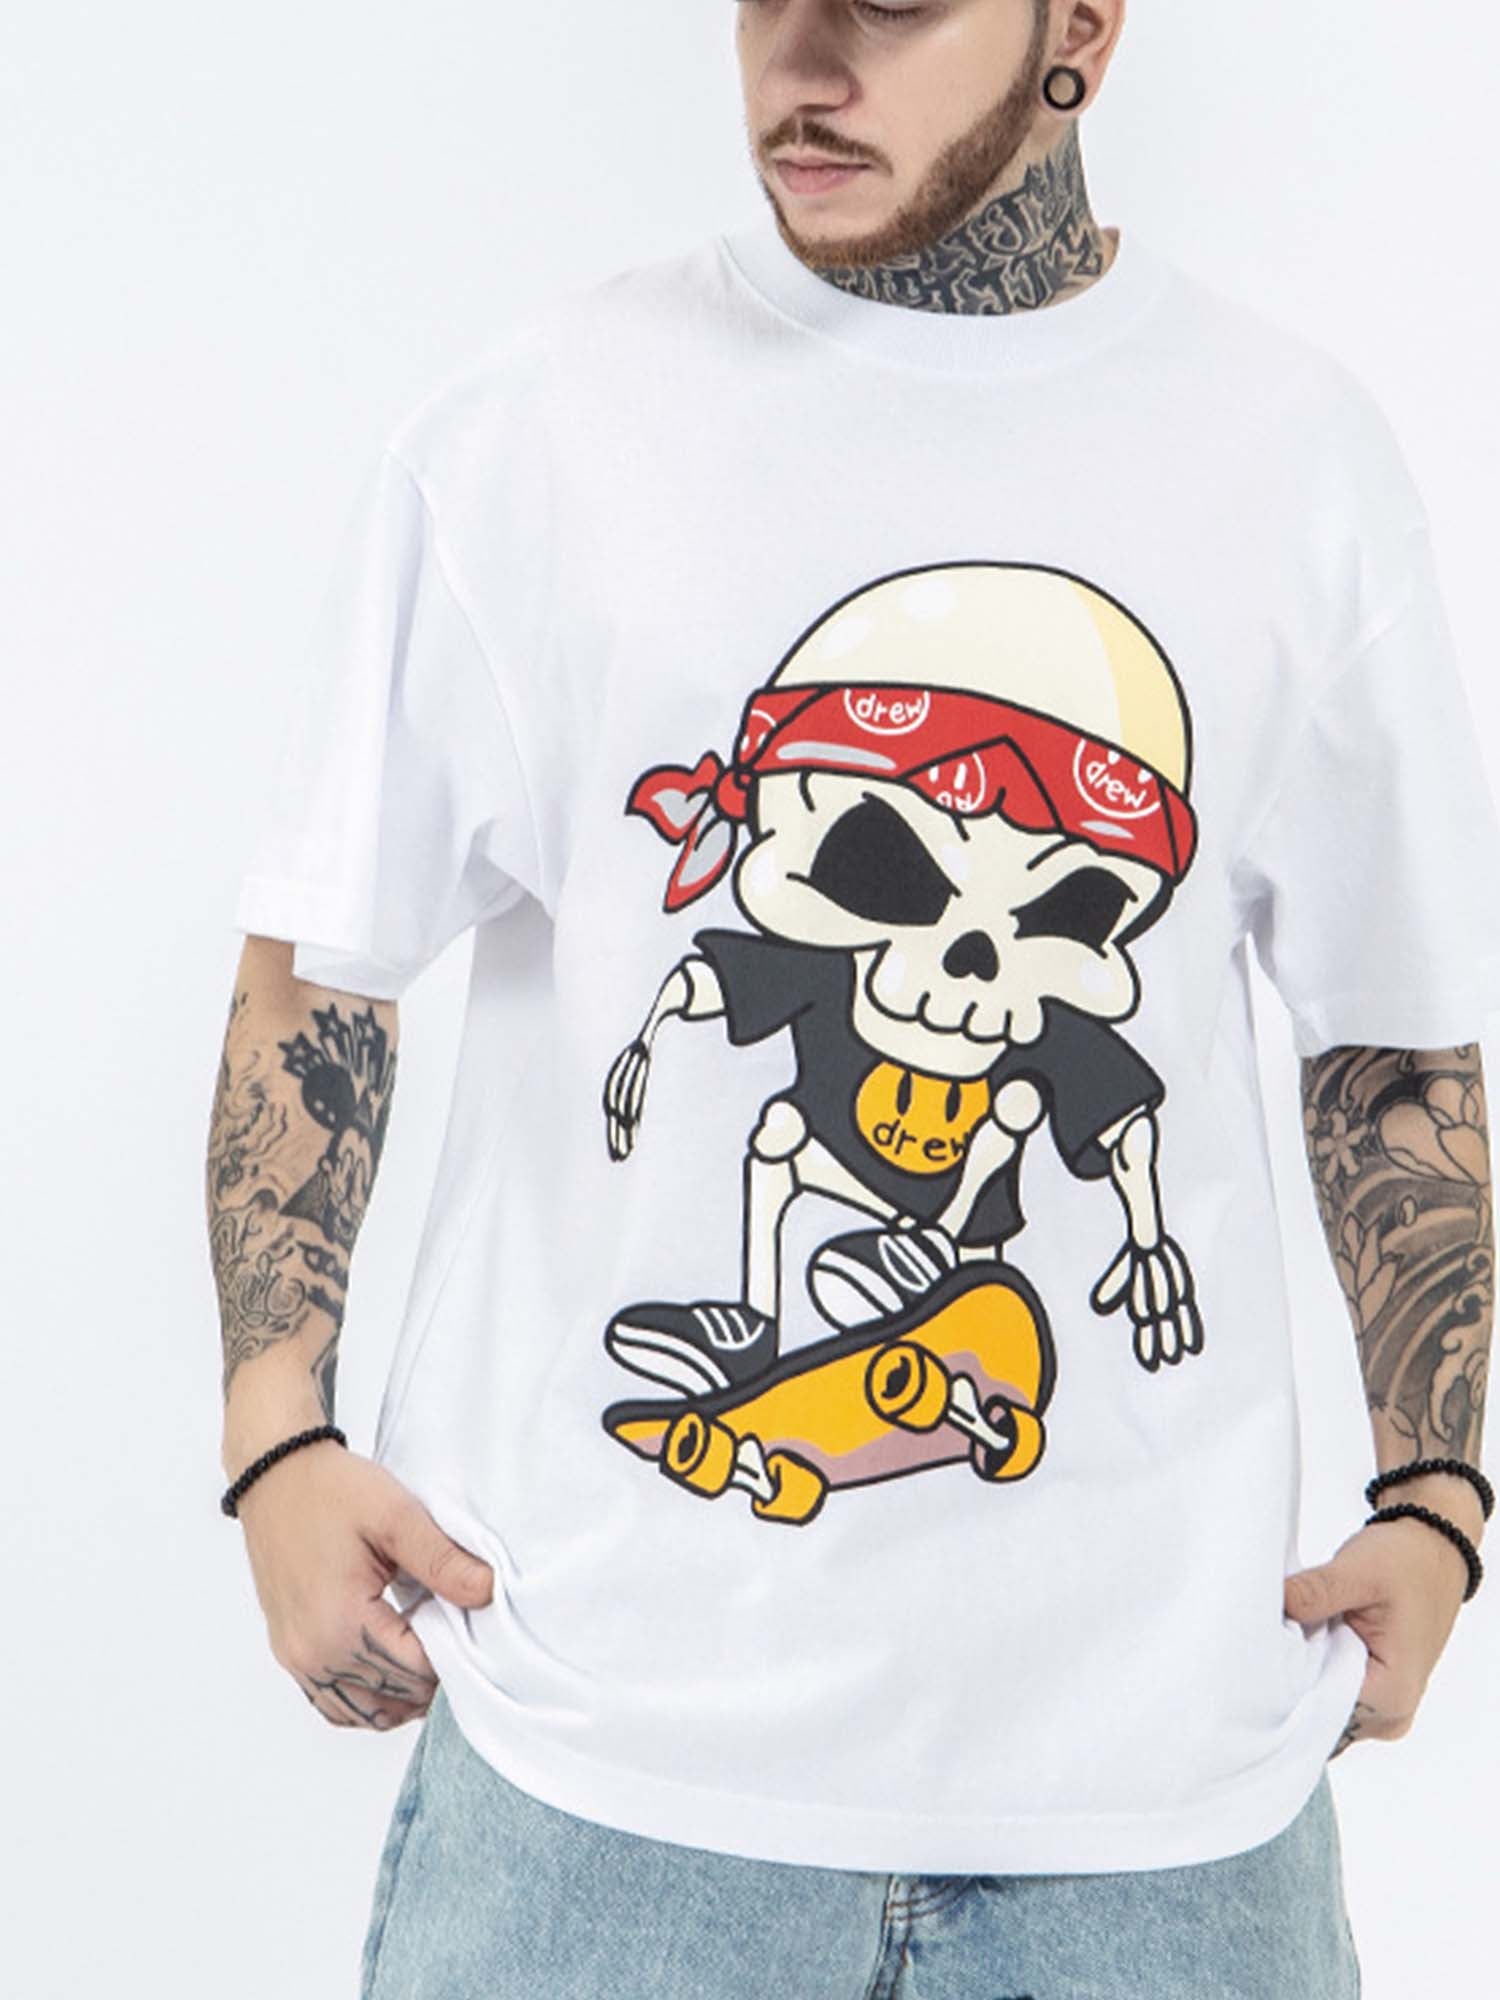 JUSTNOTAG Skateboard Skeleton Boy Print Cotton Short Sleeve Tee